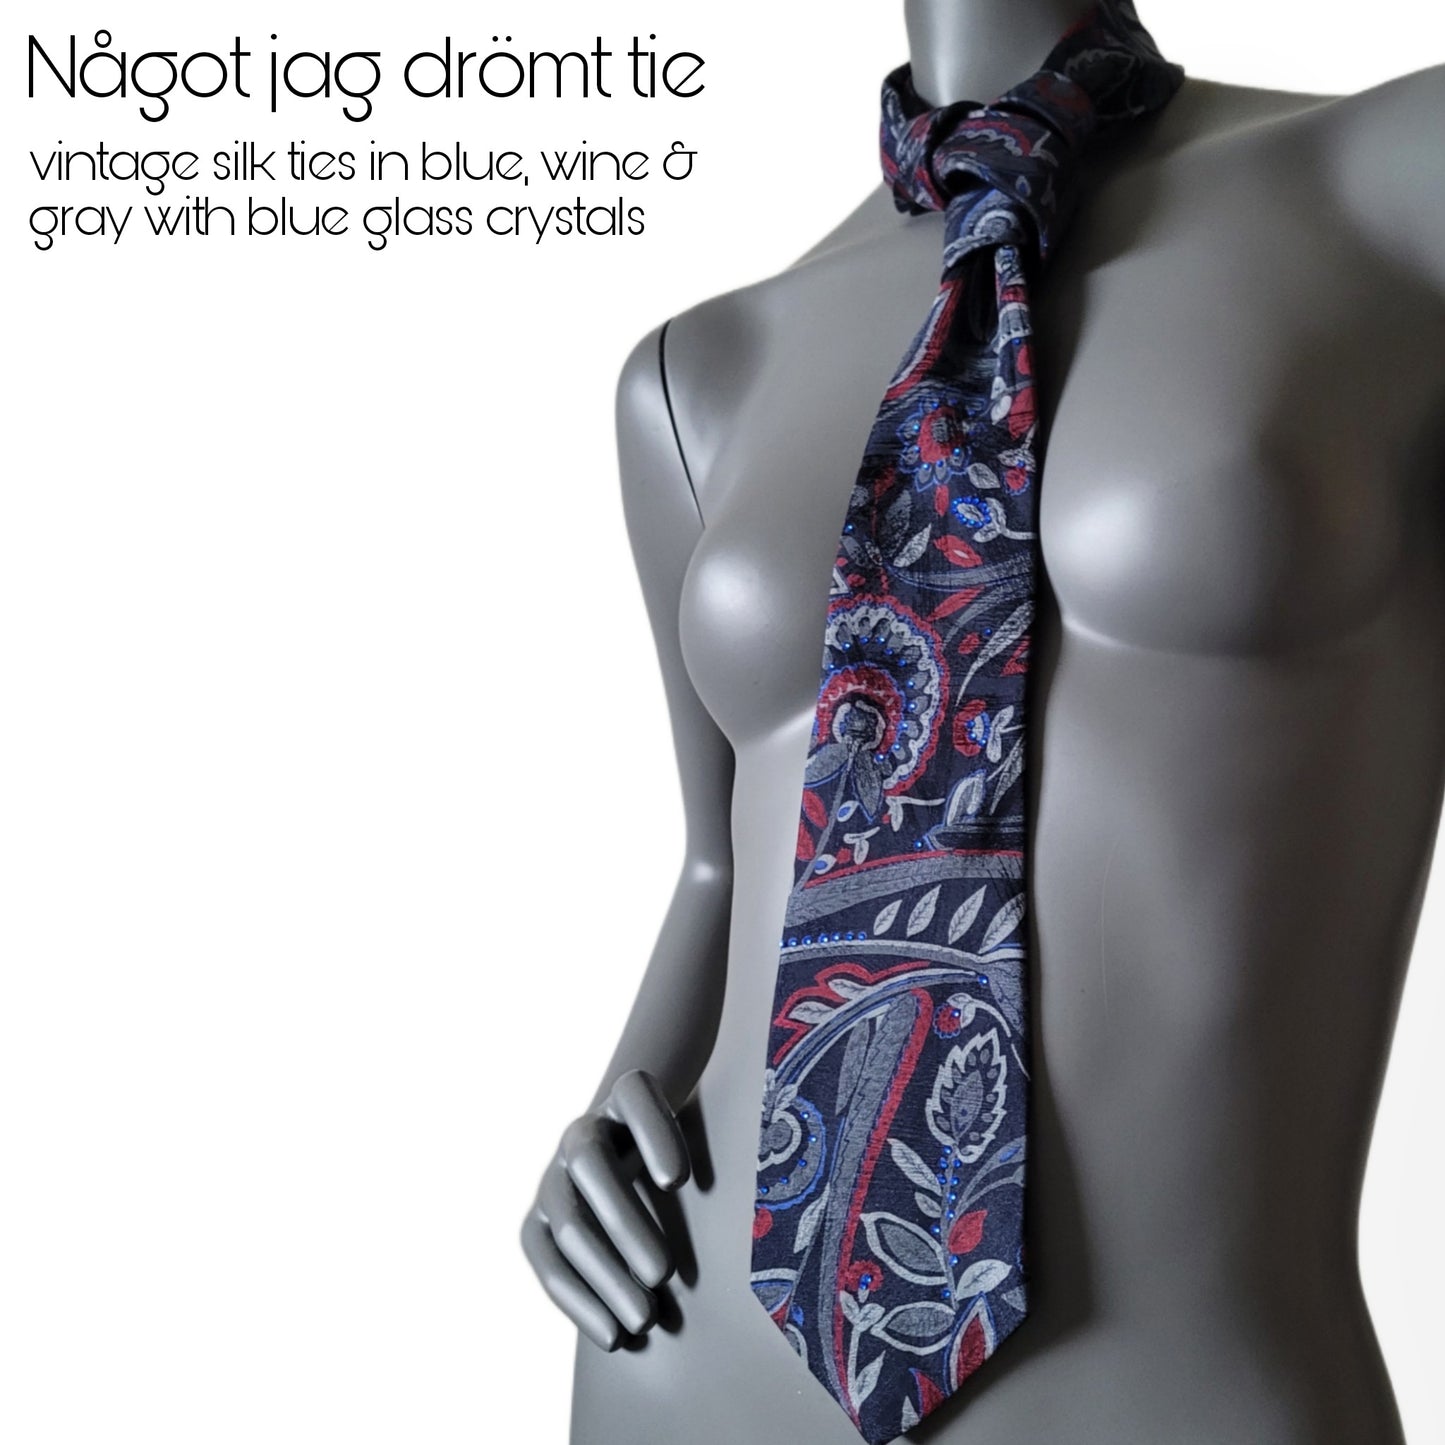 Another Dance collection: Något jag drömt tie, retro necktie with glass crystals